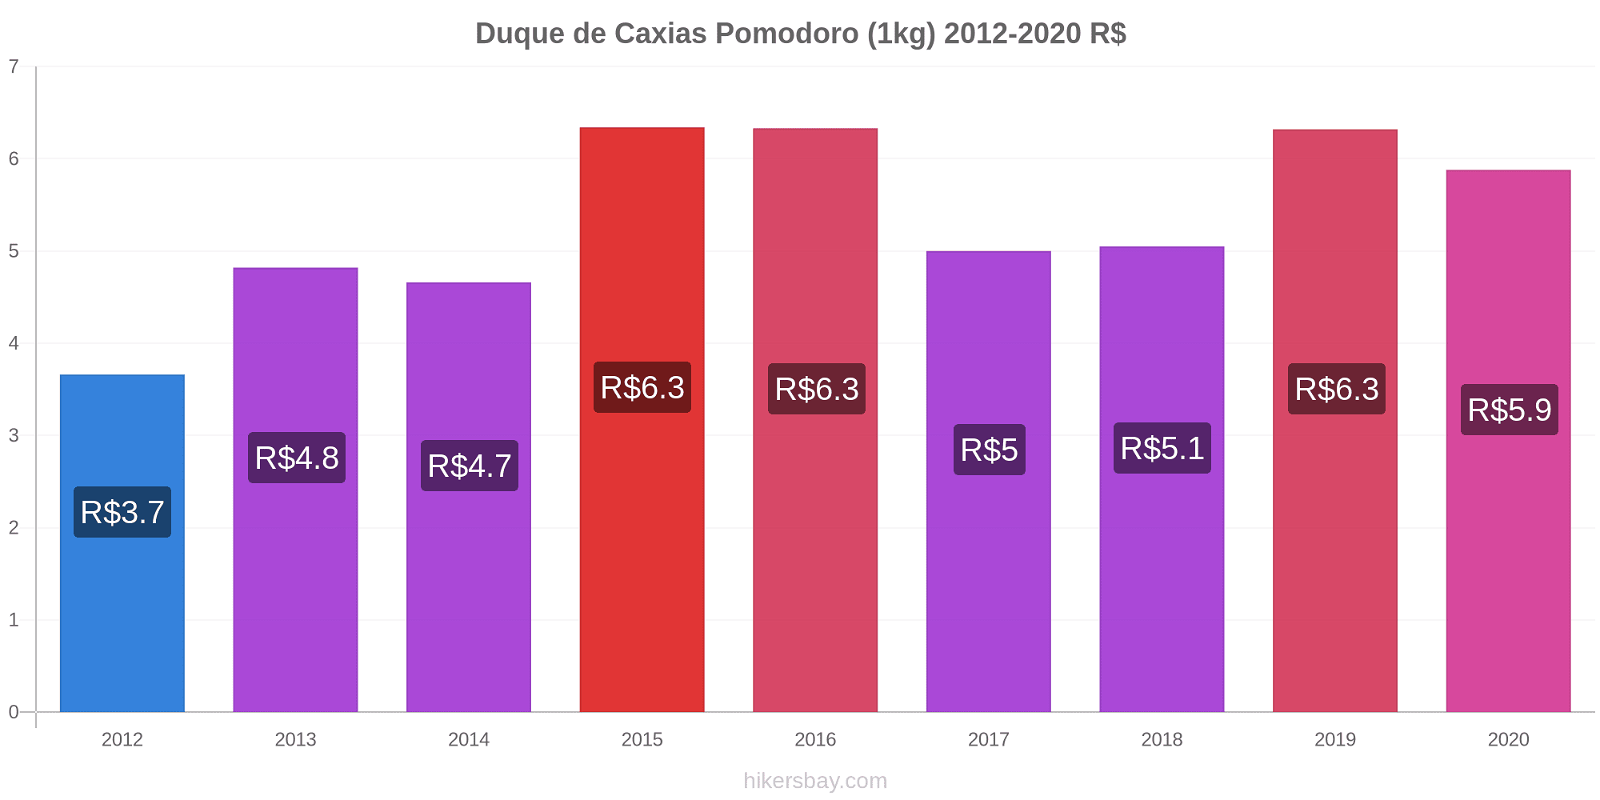 Duque de Caxias variazioni di prezzo Pomodoro (1kg) hikersbay.com